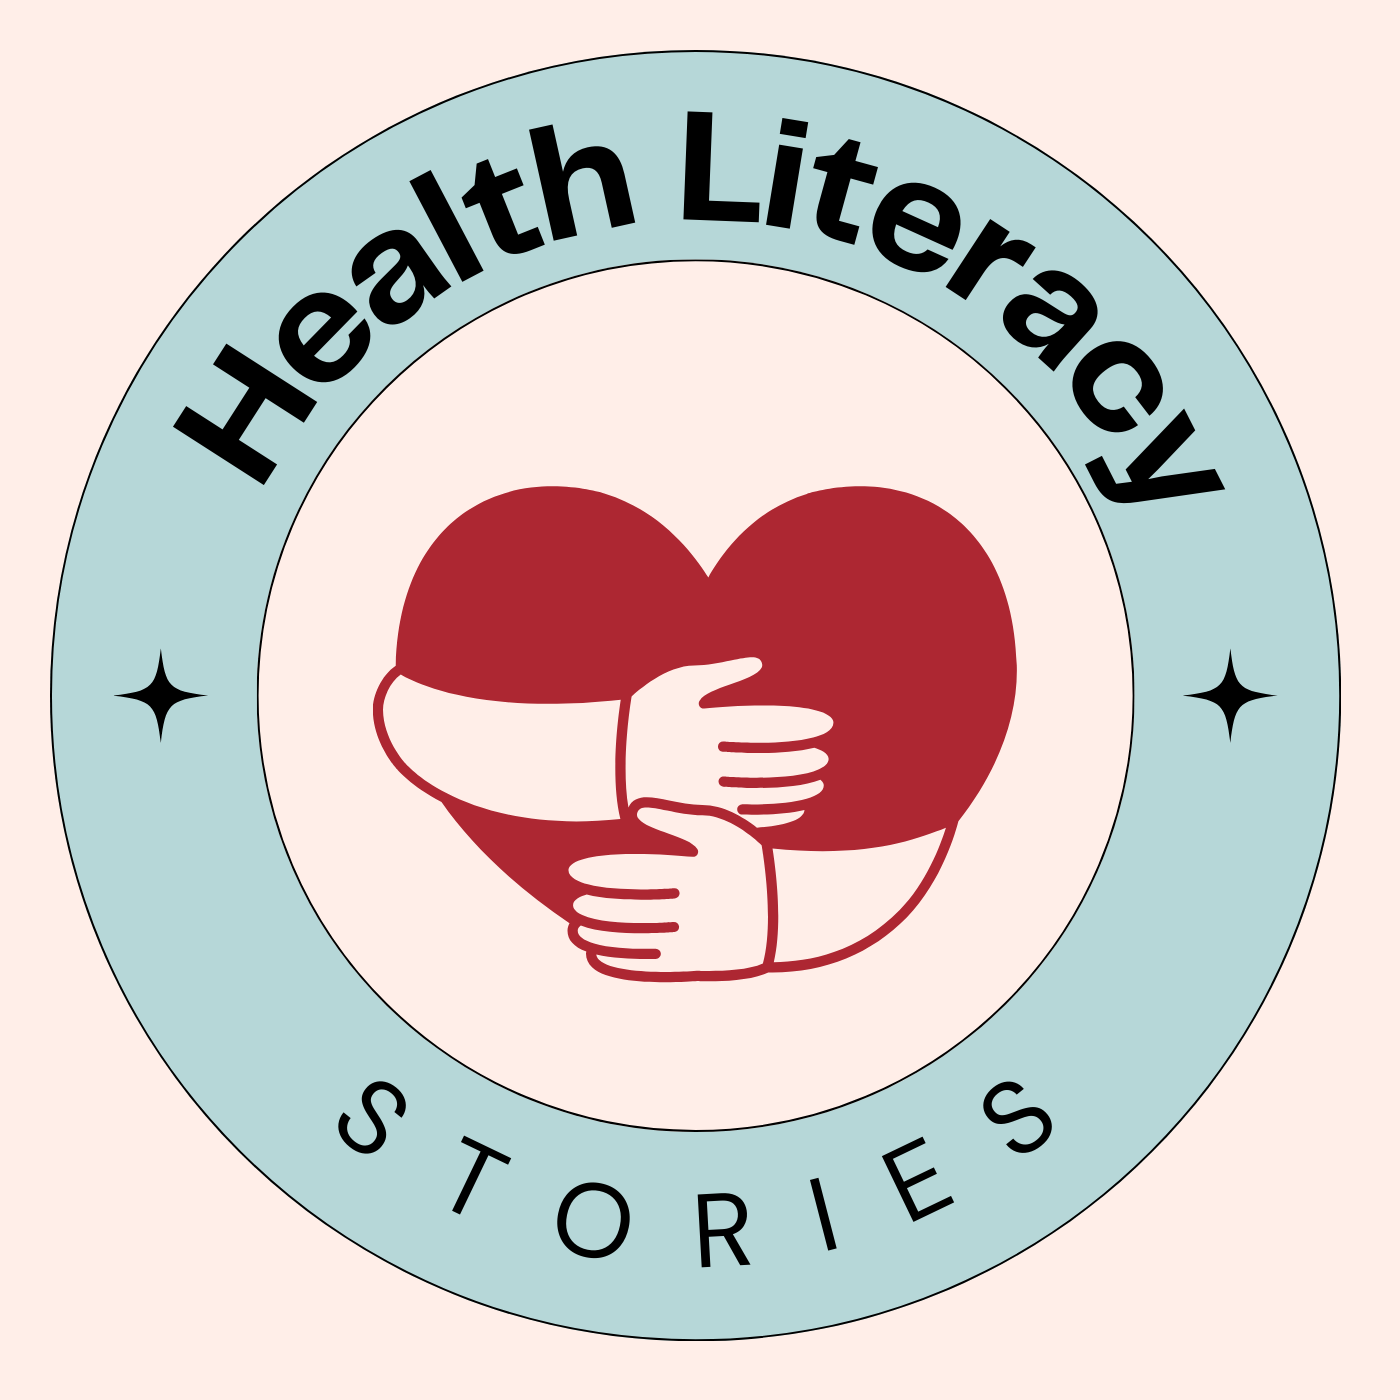 Health Literacy Stories